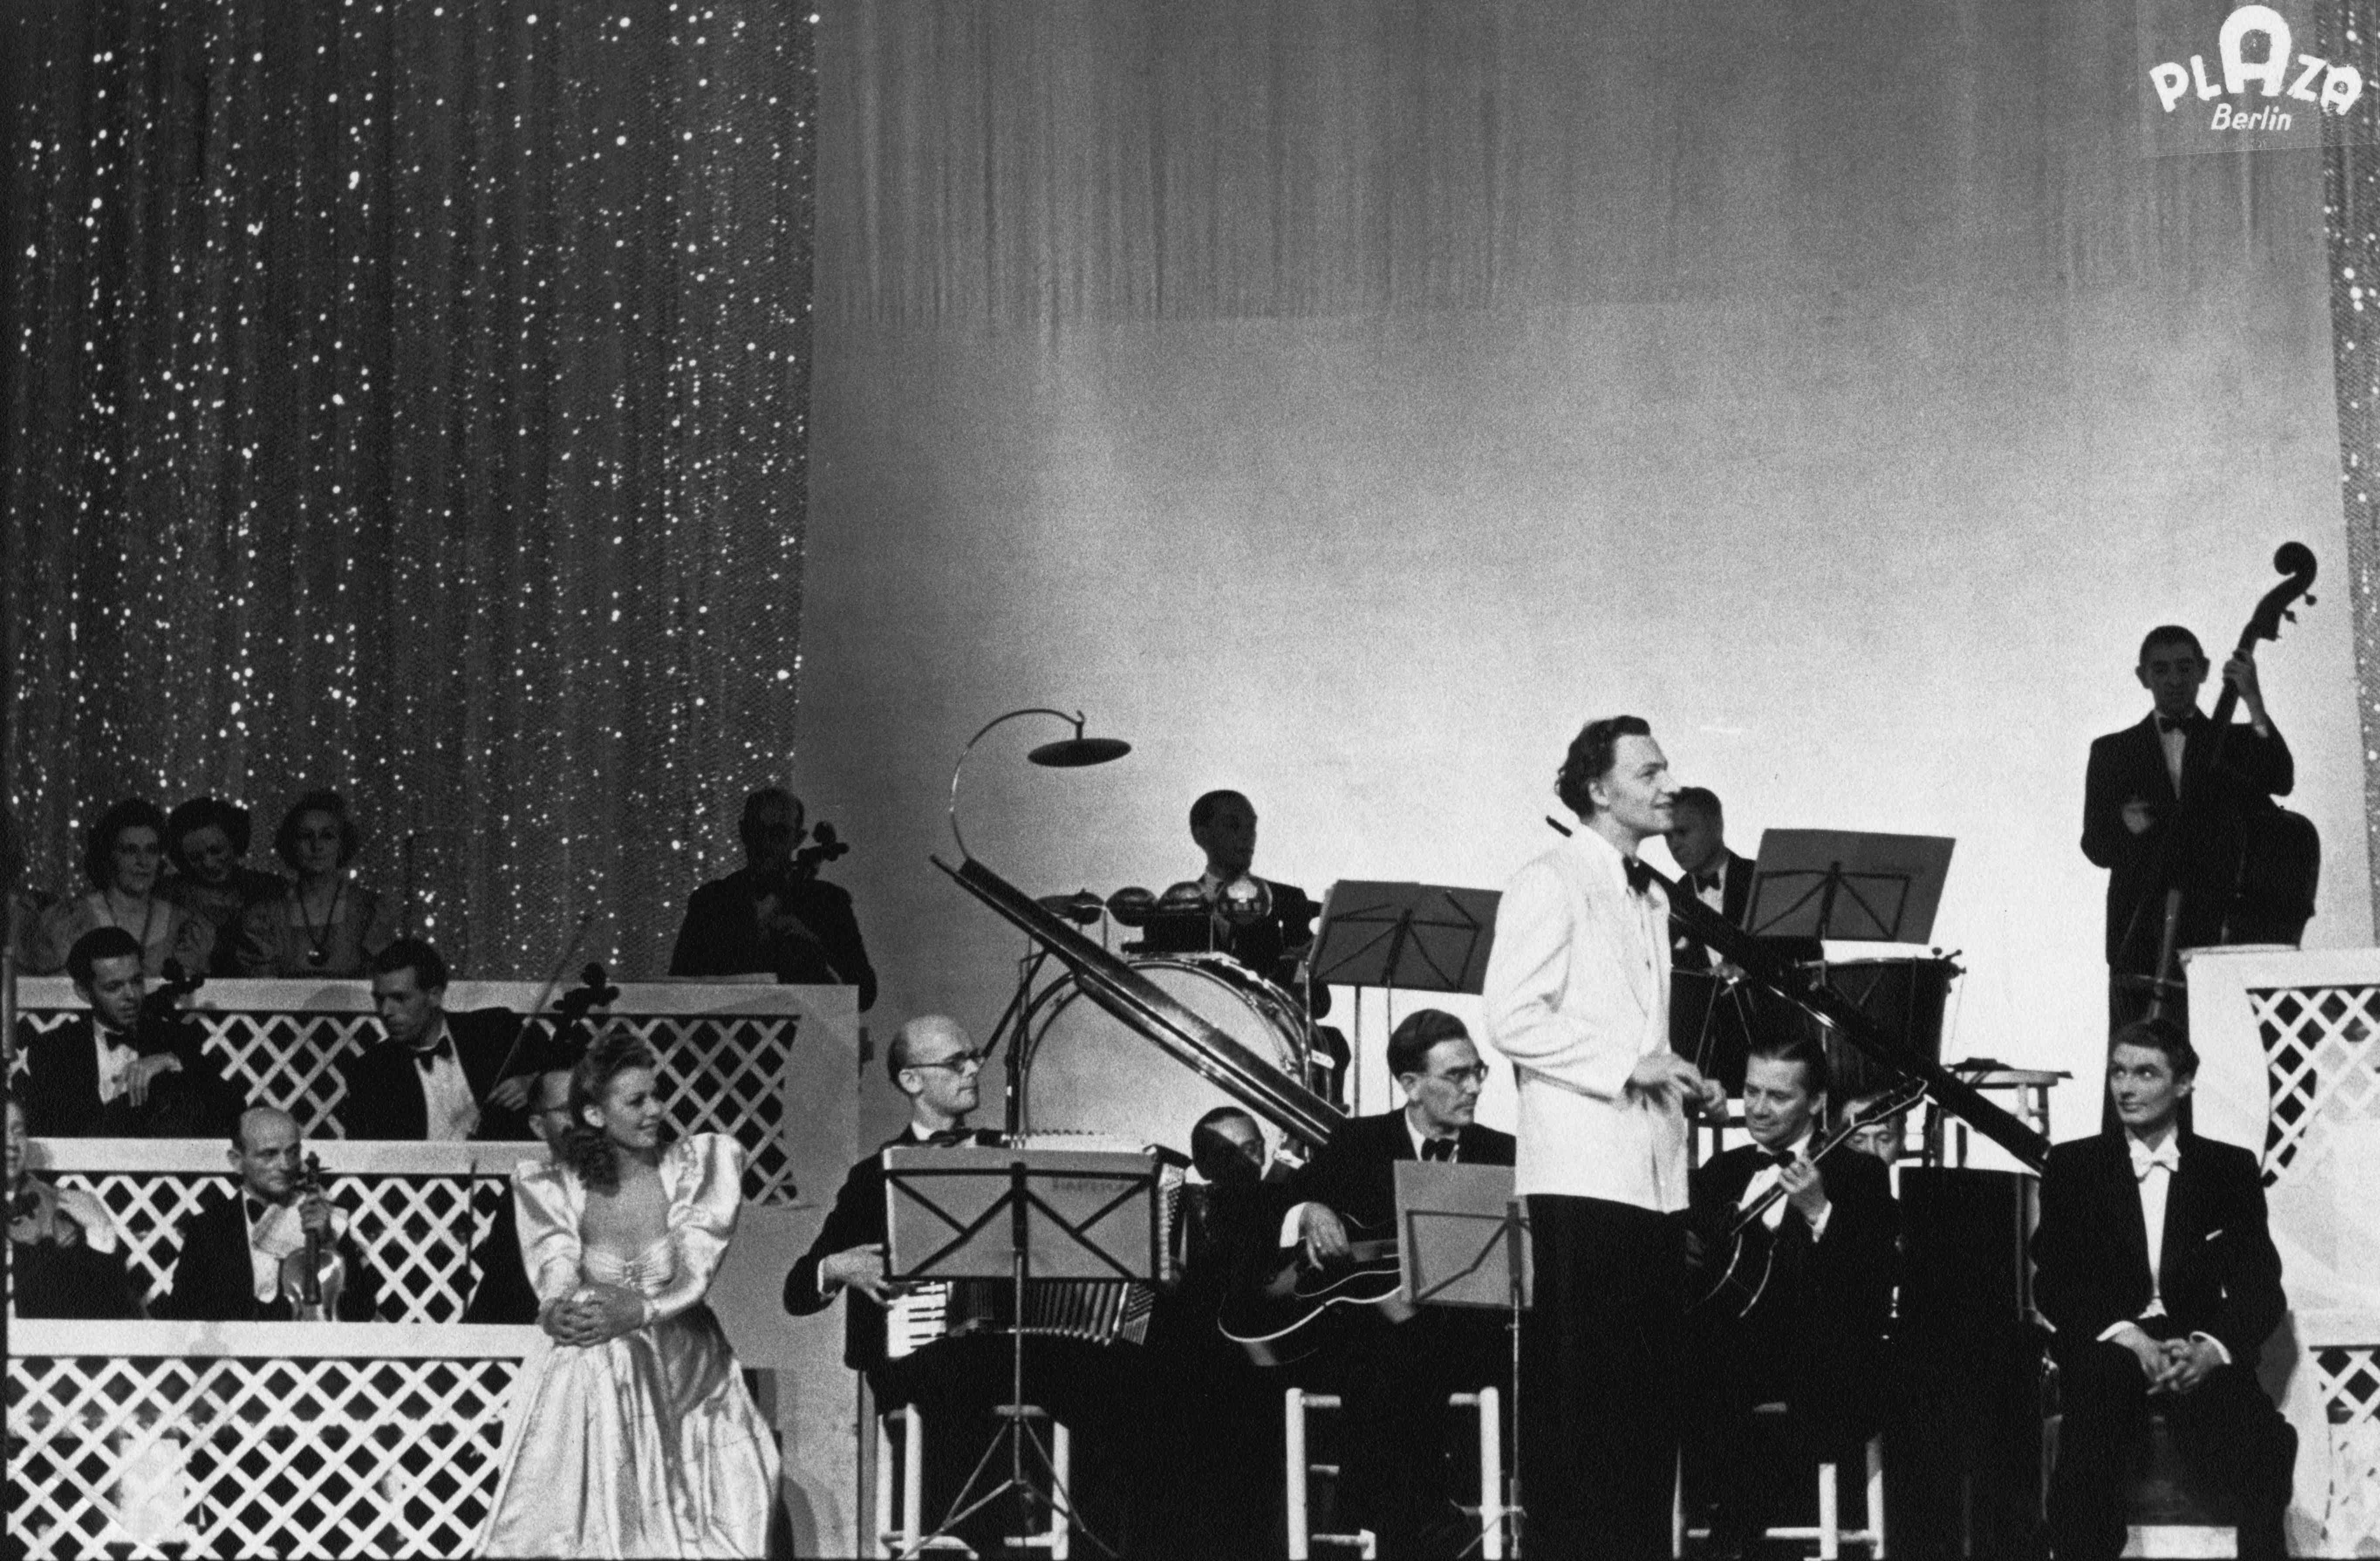 Concert at music hall „Plaza", Berlin around 1935